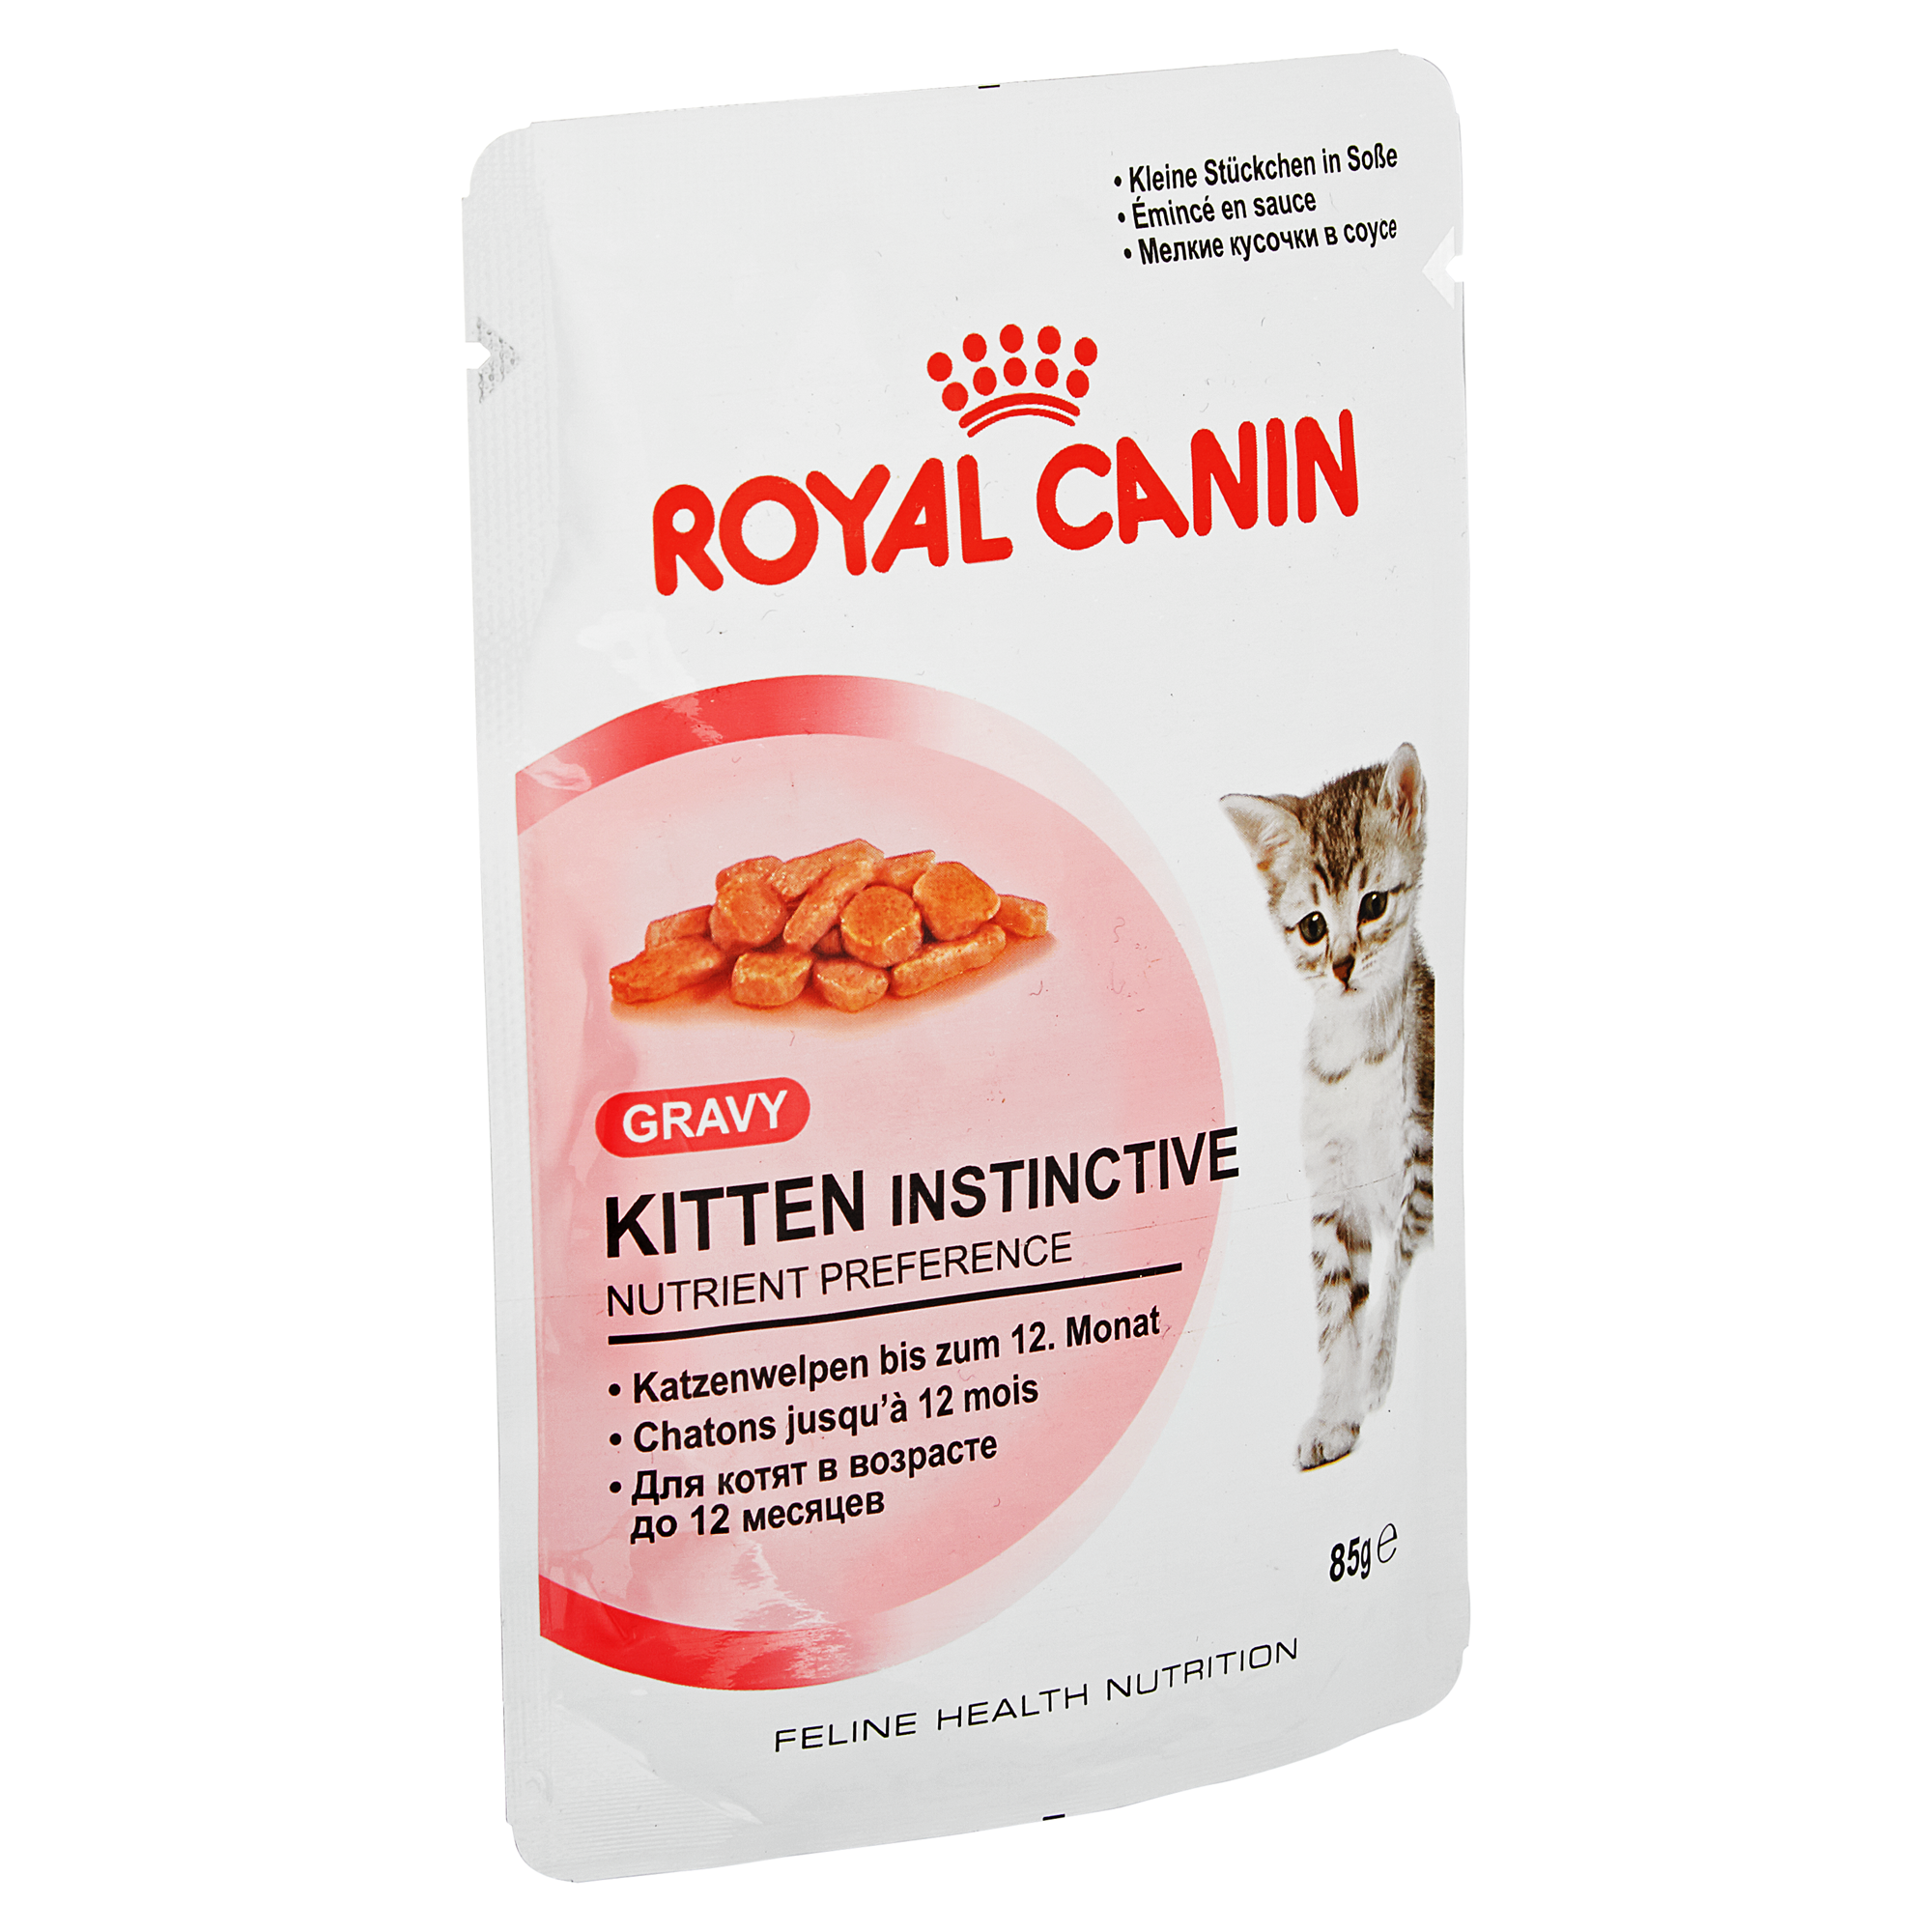 Katzennassfutter "Feline Health Nutrition" Kitten Instinctive 85 g + product picture